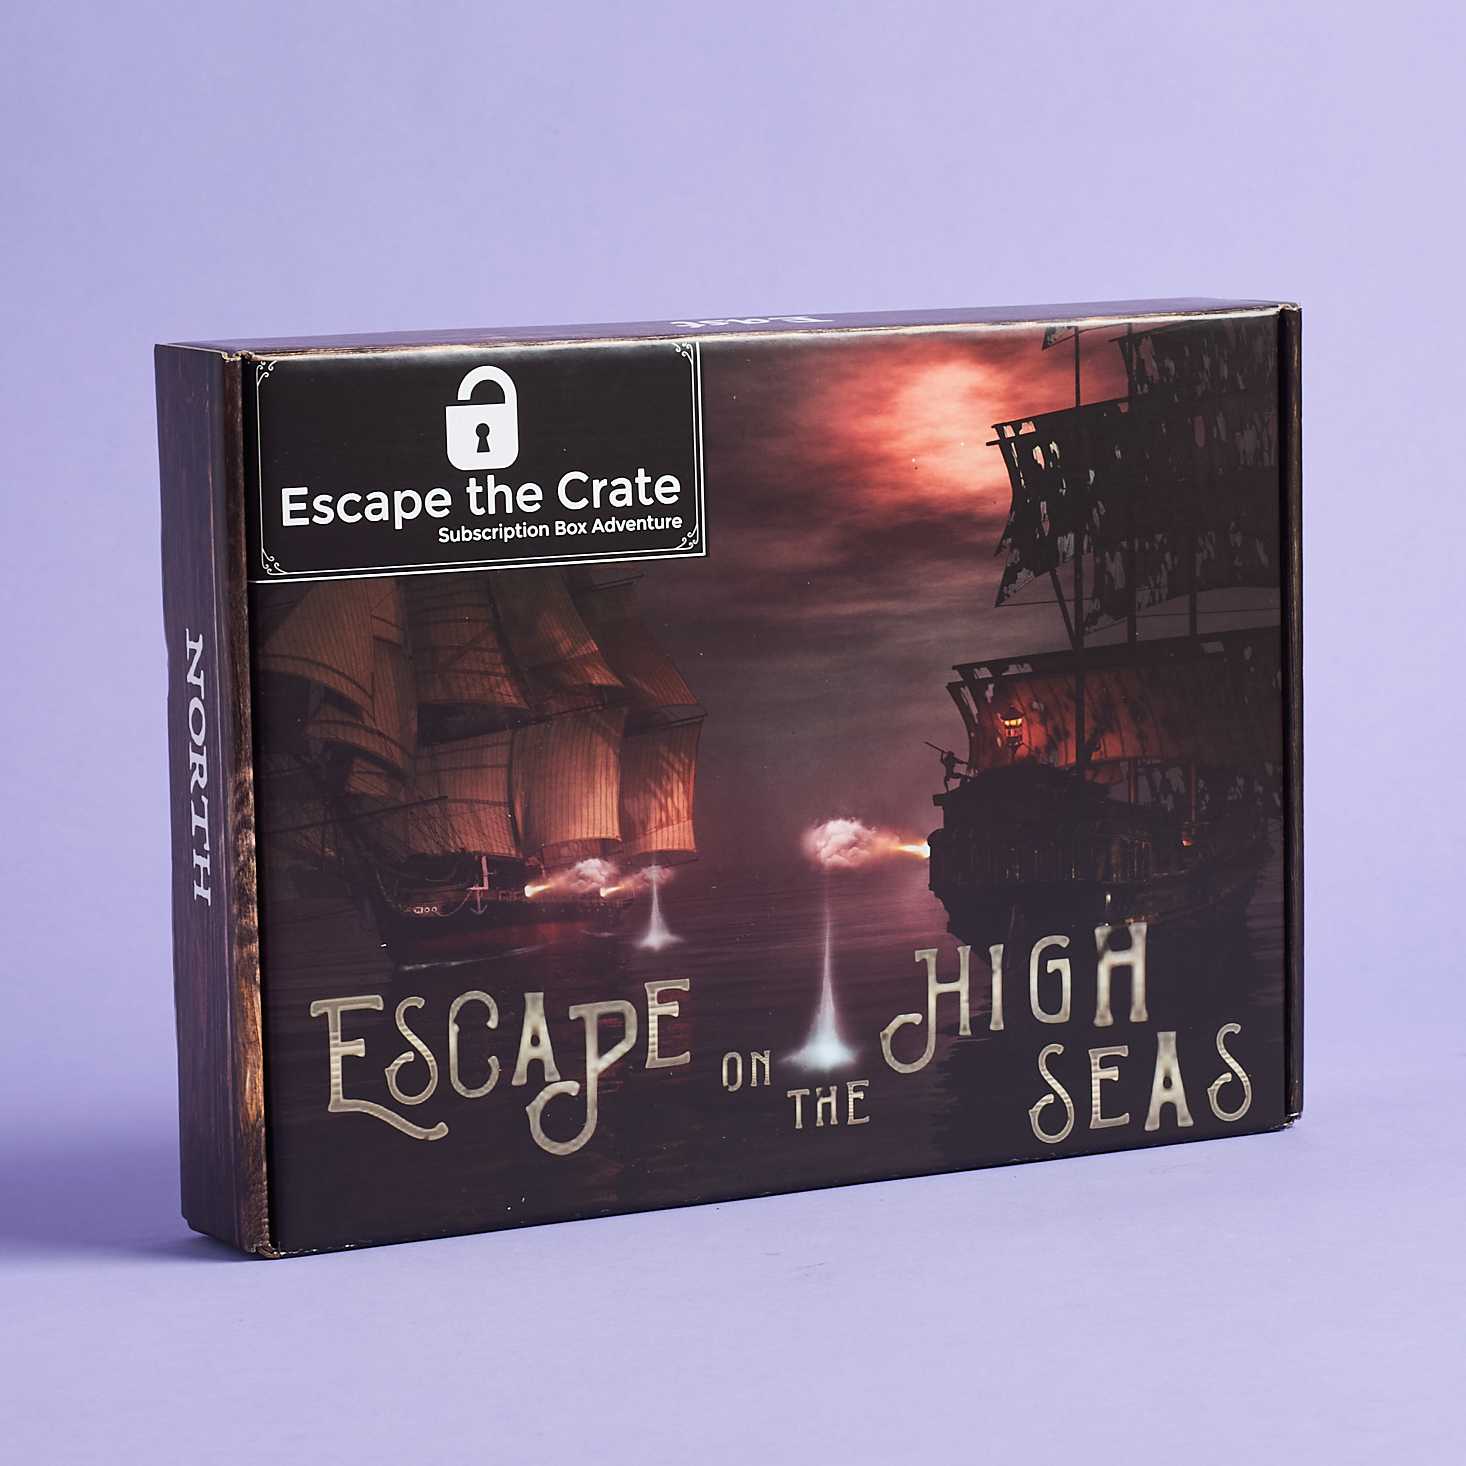 Escape the Crate Review + Coupon – “Escape The High Seas”